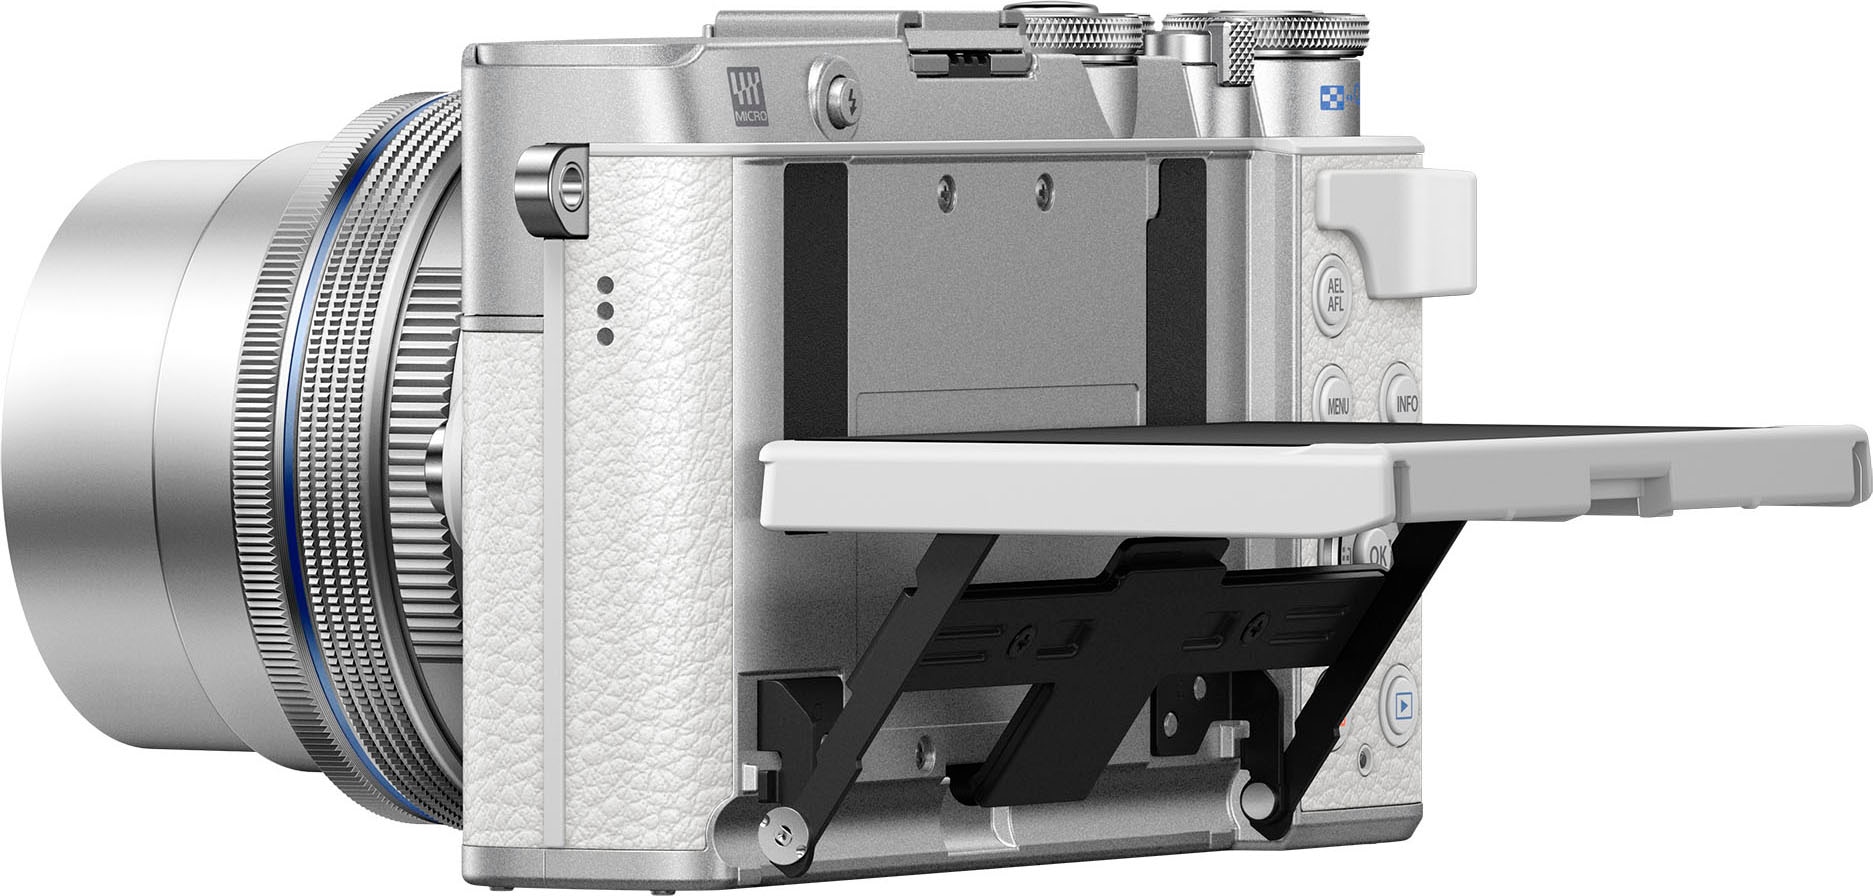 Olympus Systemkamera »E‑P7«, M. Zuiko Digital ED 14-42mm F3.5-5.6 EZ Pancake, 20,3 MP, 3 fachx opt. Zoom, WLAN-Bluetooth